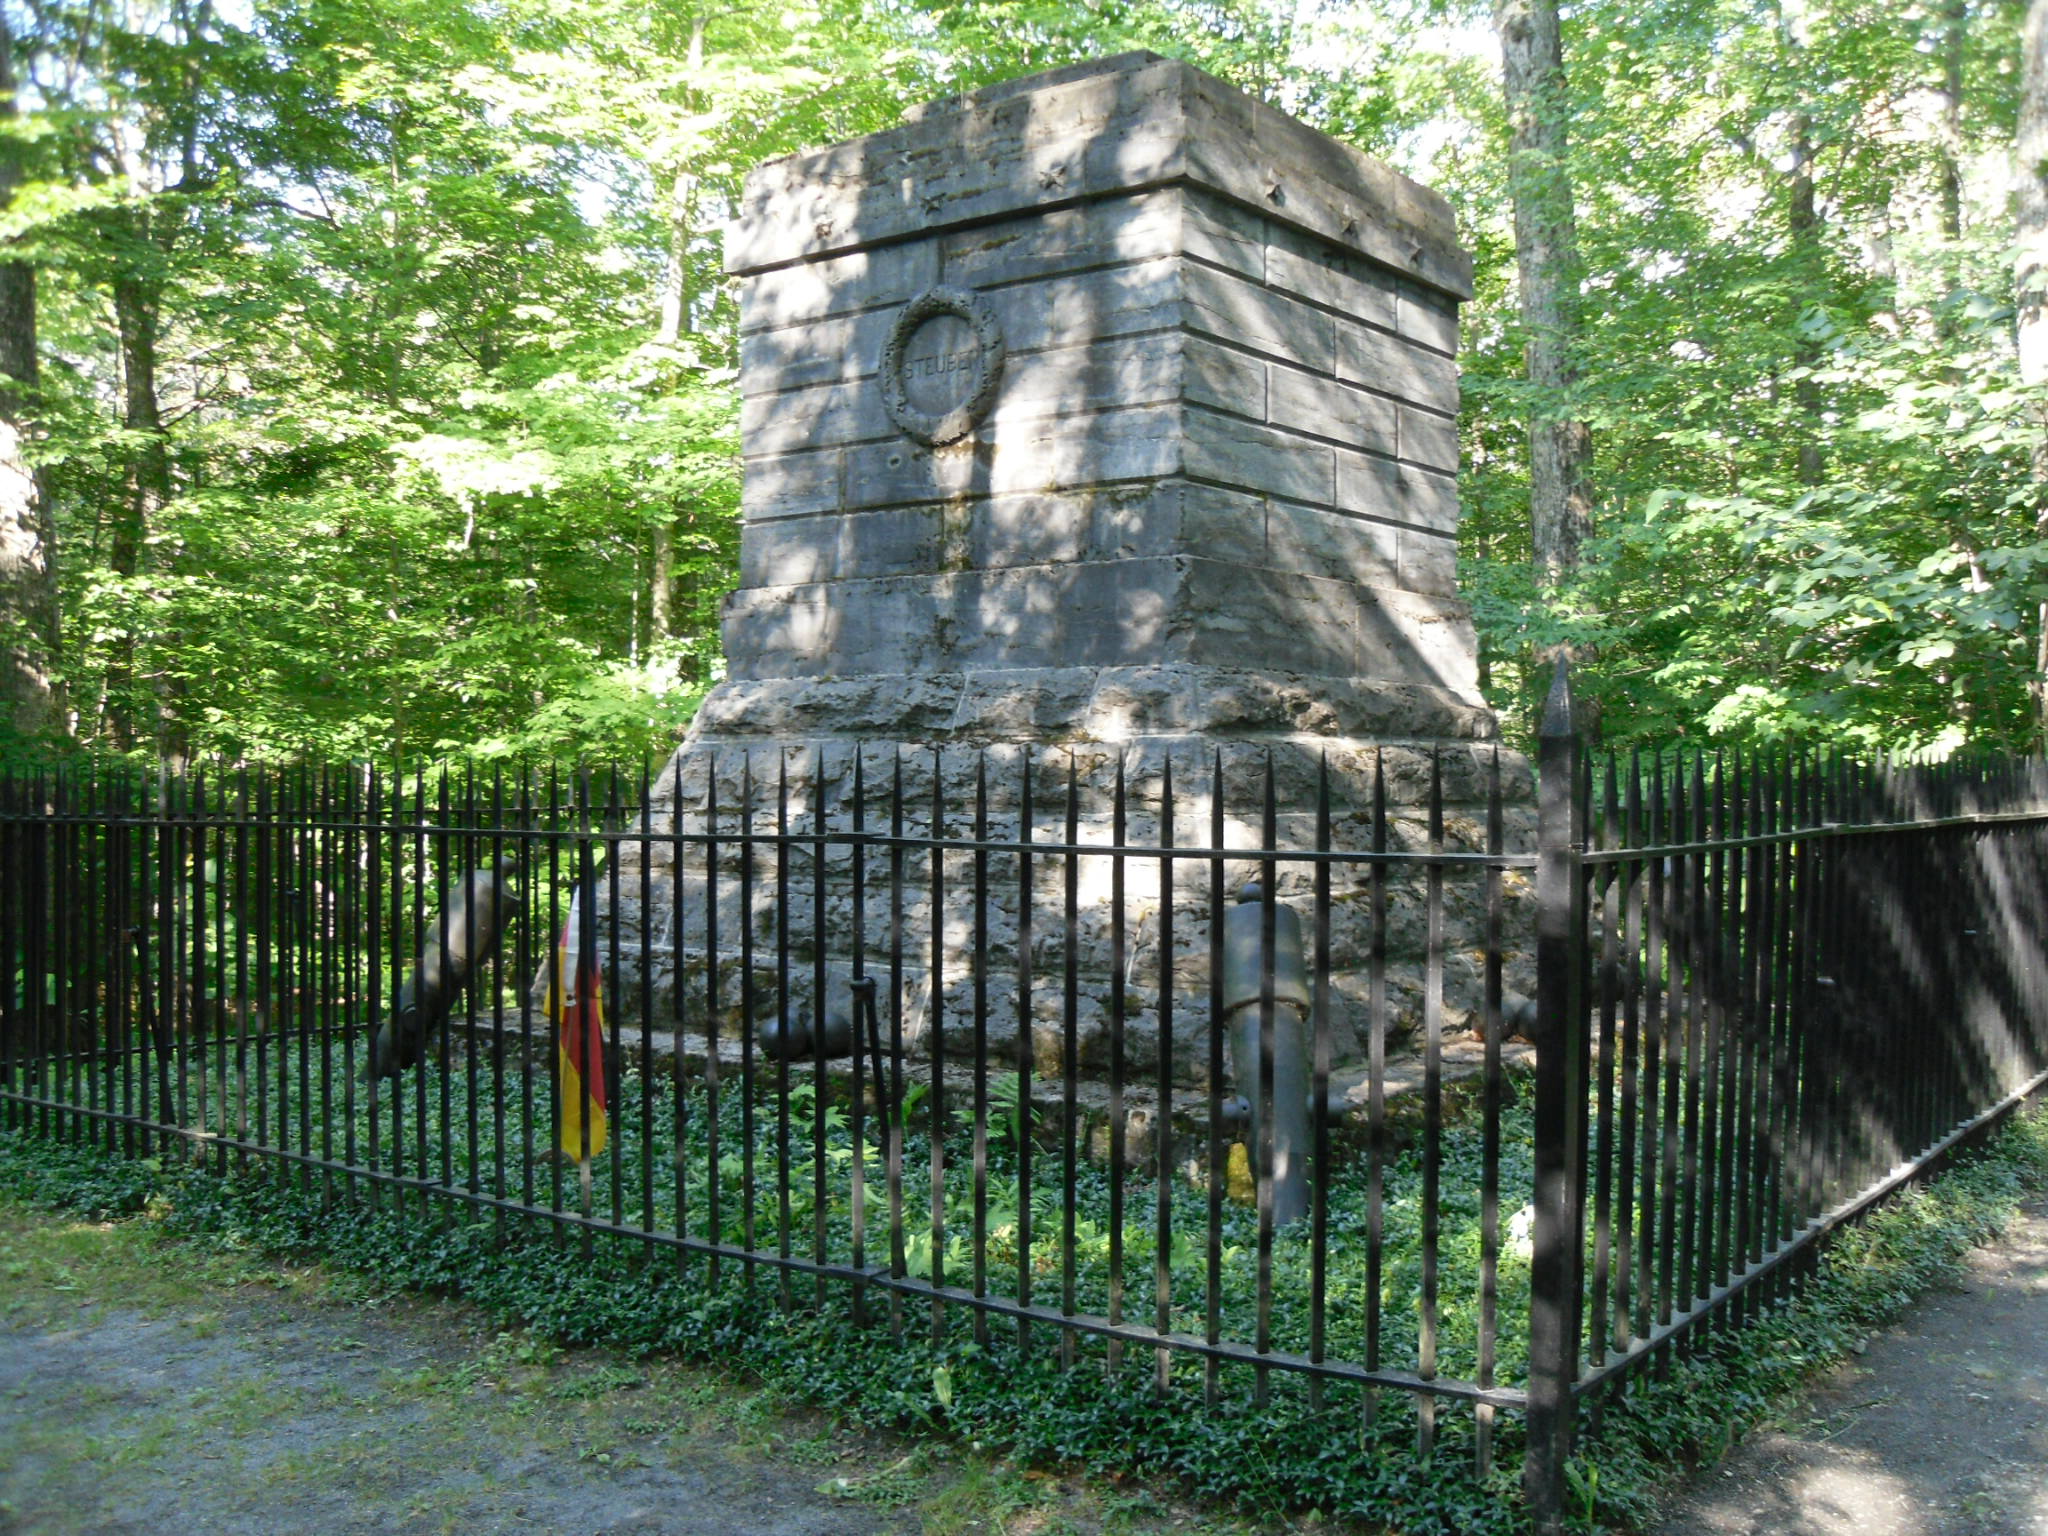 Steuben Memorial State Historic Site